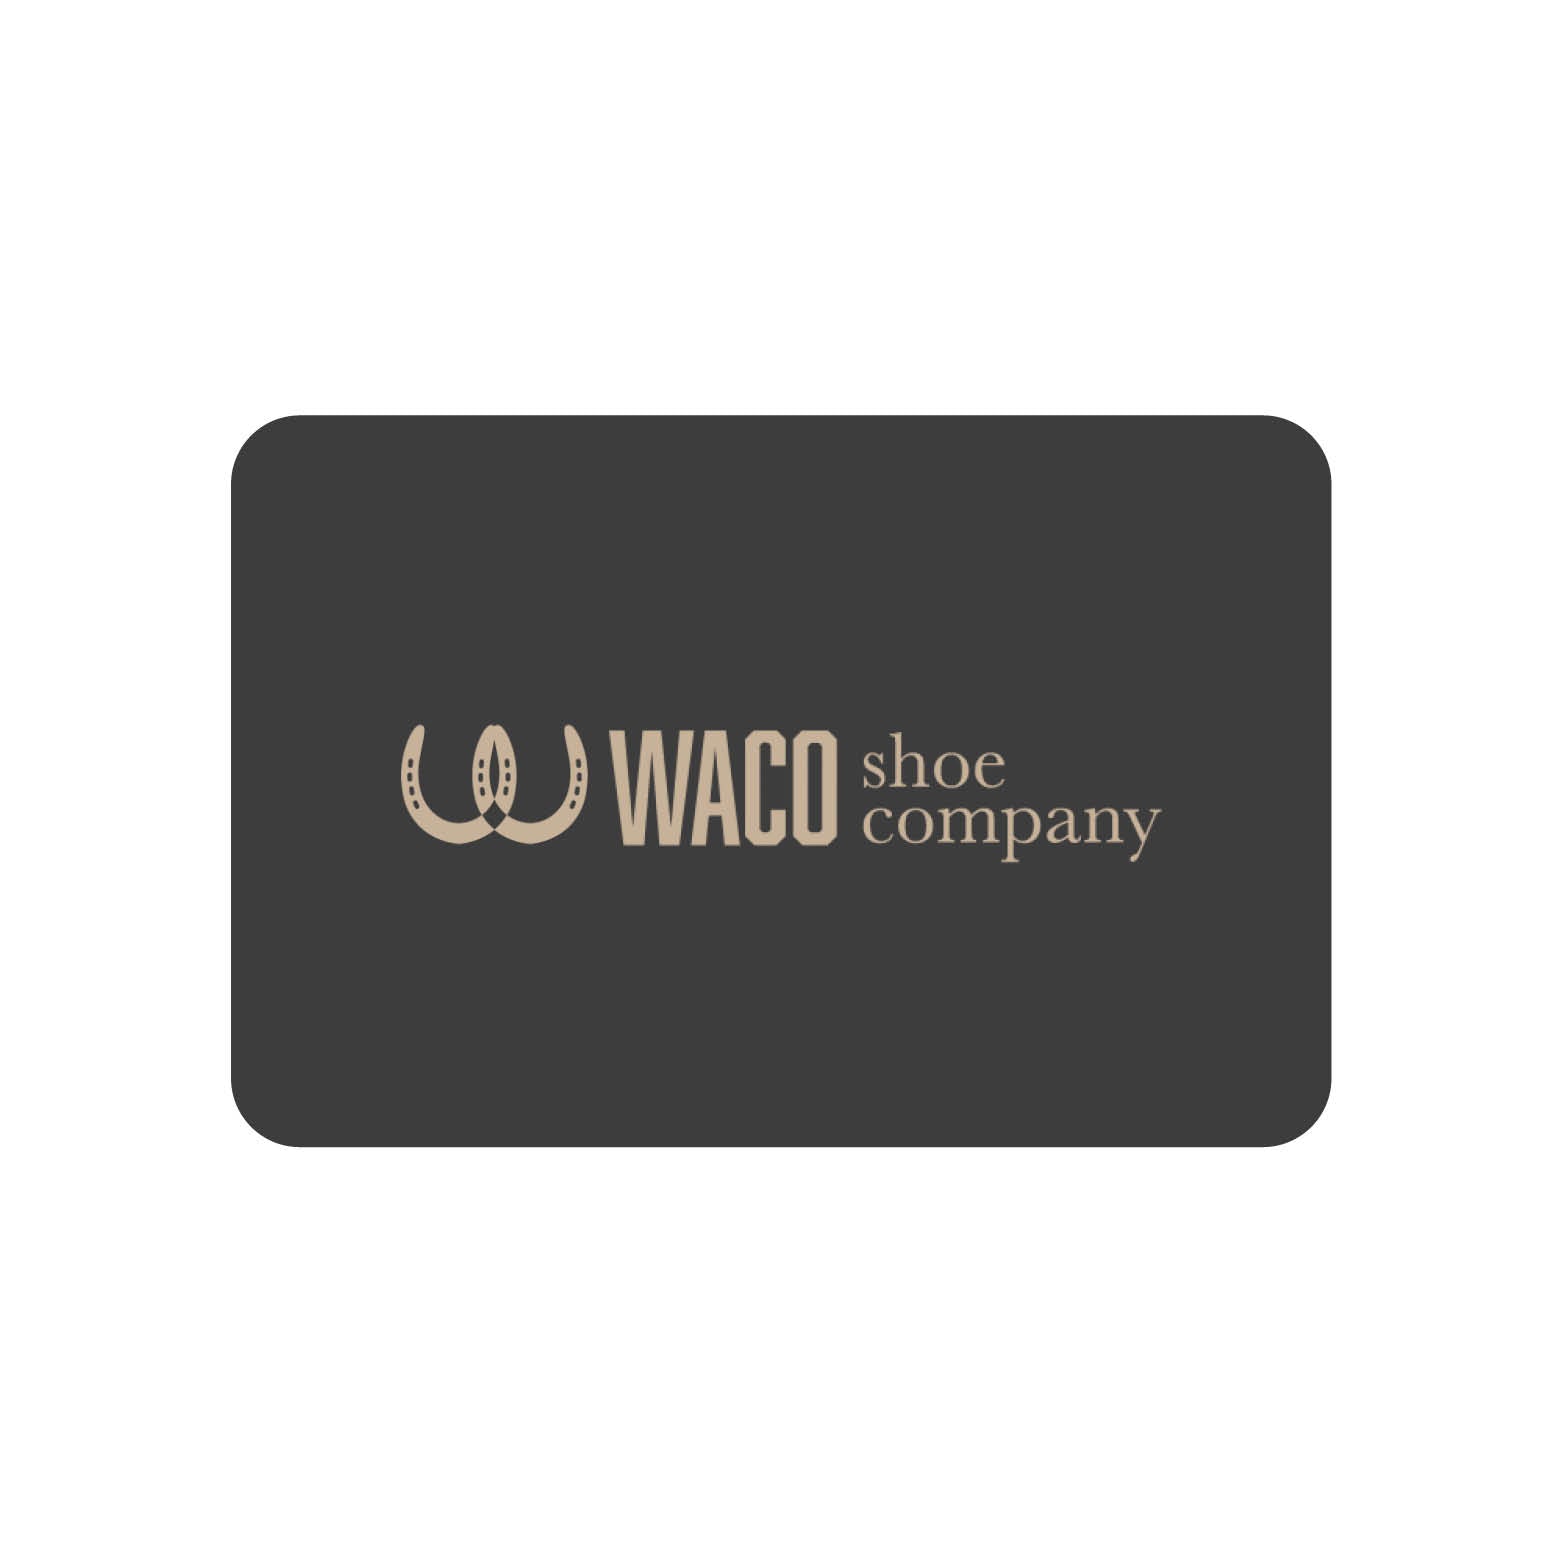 Waco Shoe Company